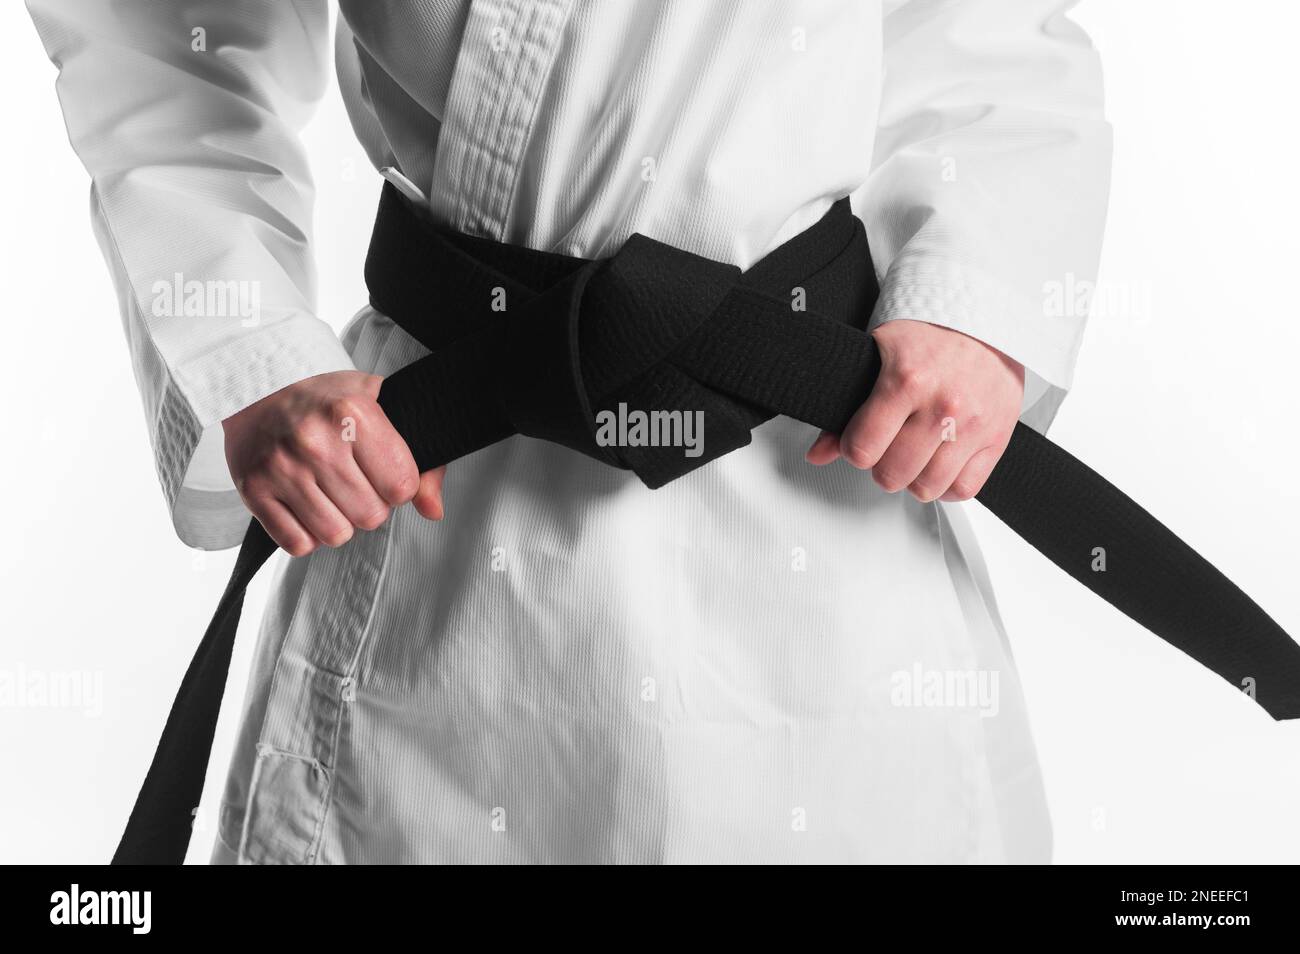 female holding karate black belt Stock Photo